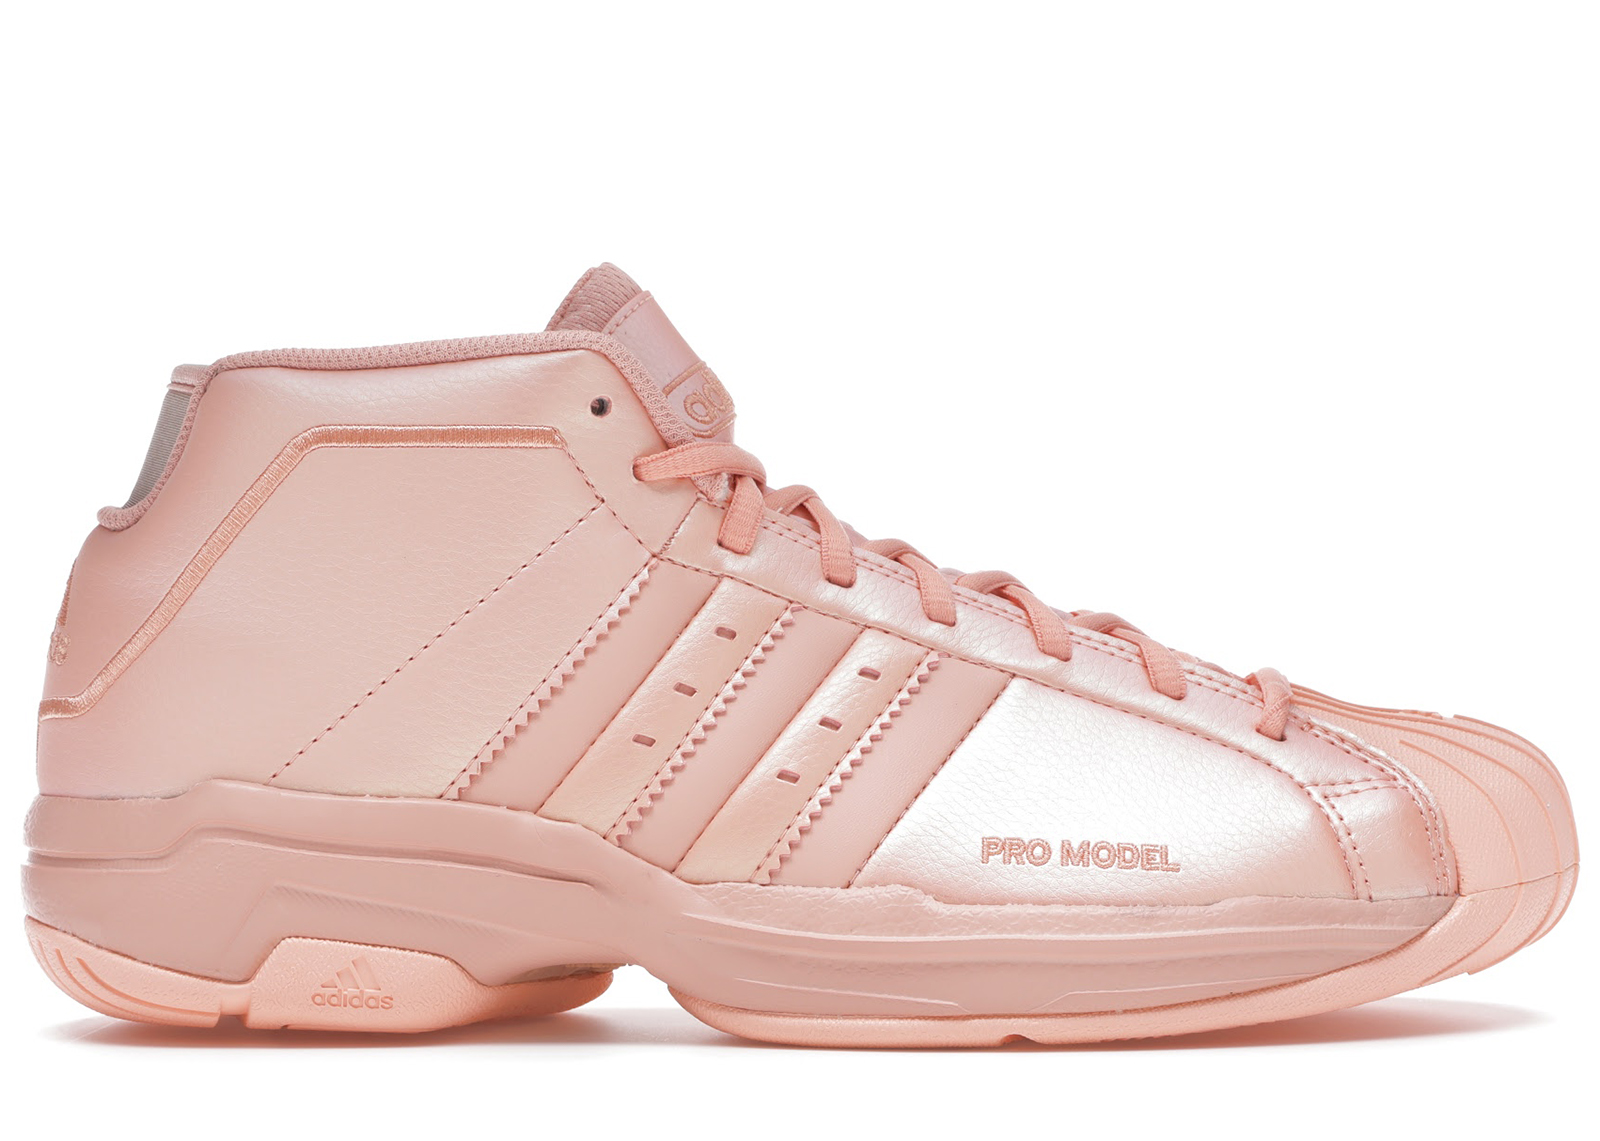 men's adidas pro model 2g basketball shoes